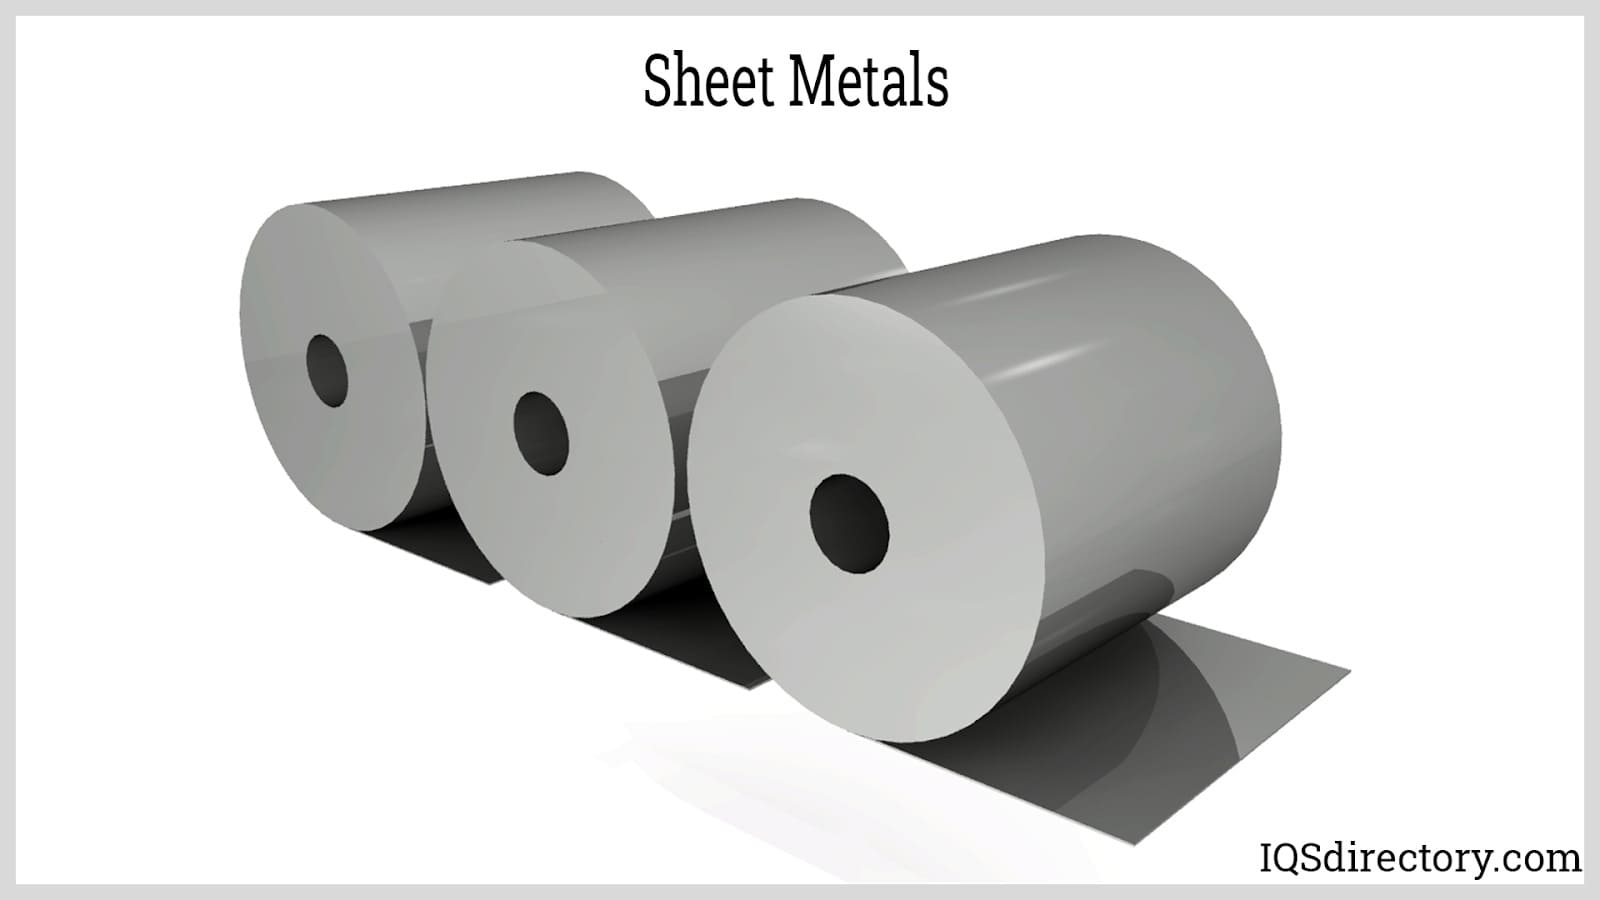 Sheet Metals